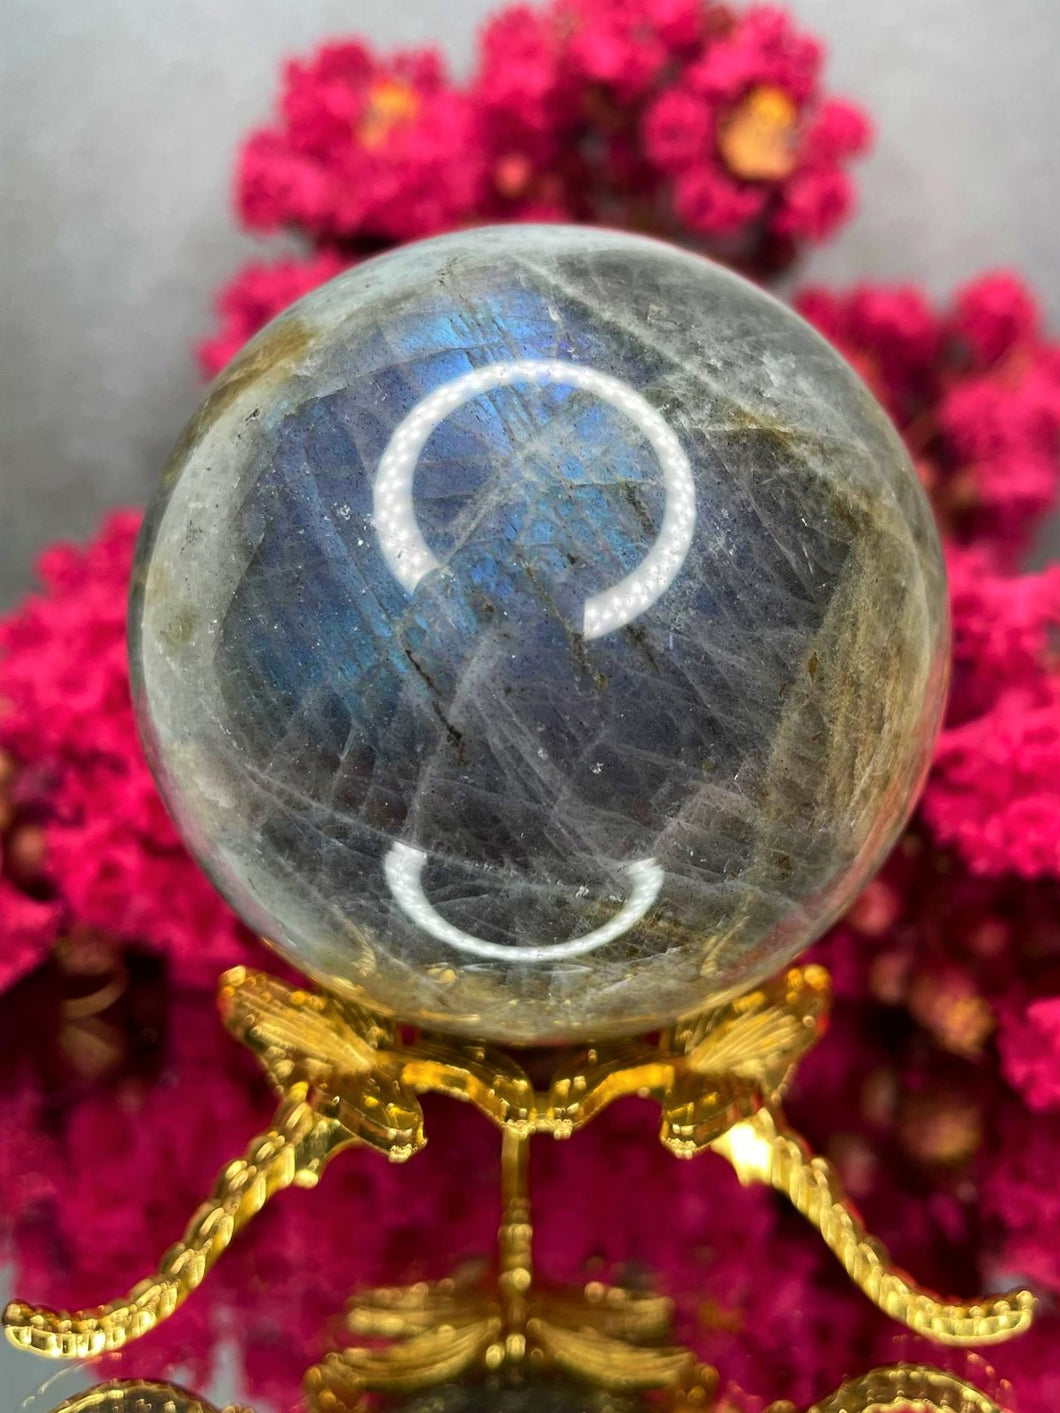 Stunning Labradorite Crystal Sphere With Flash